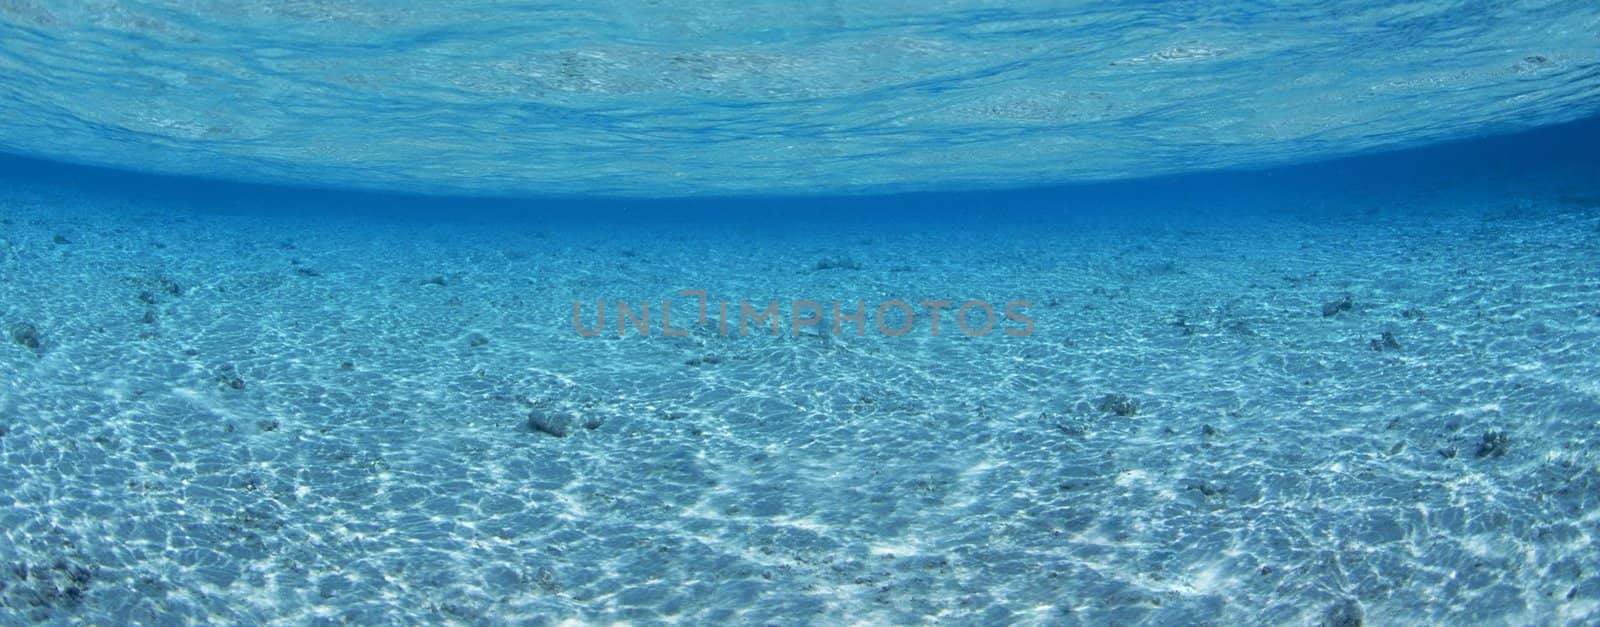 Underwater by ozaiachin